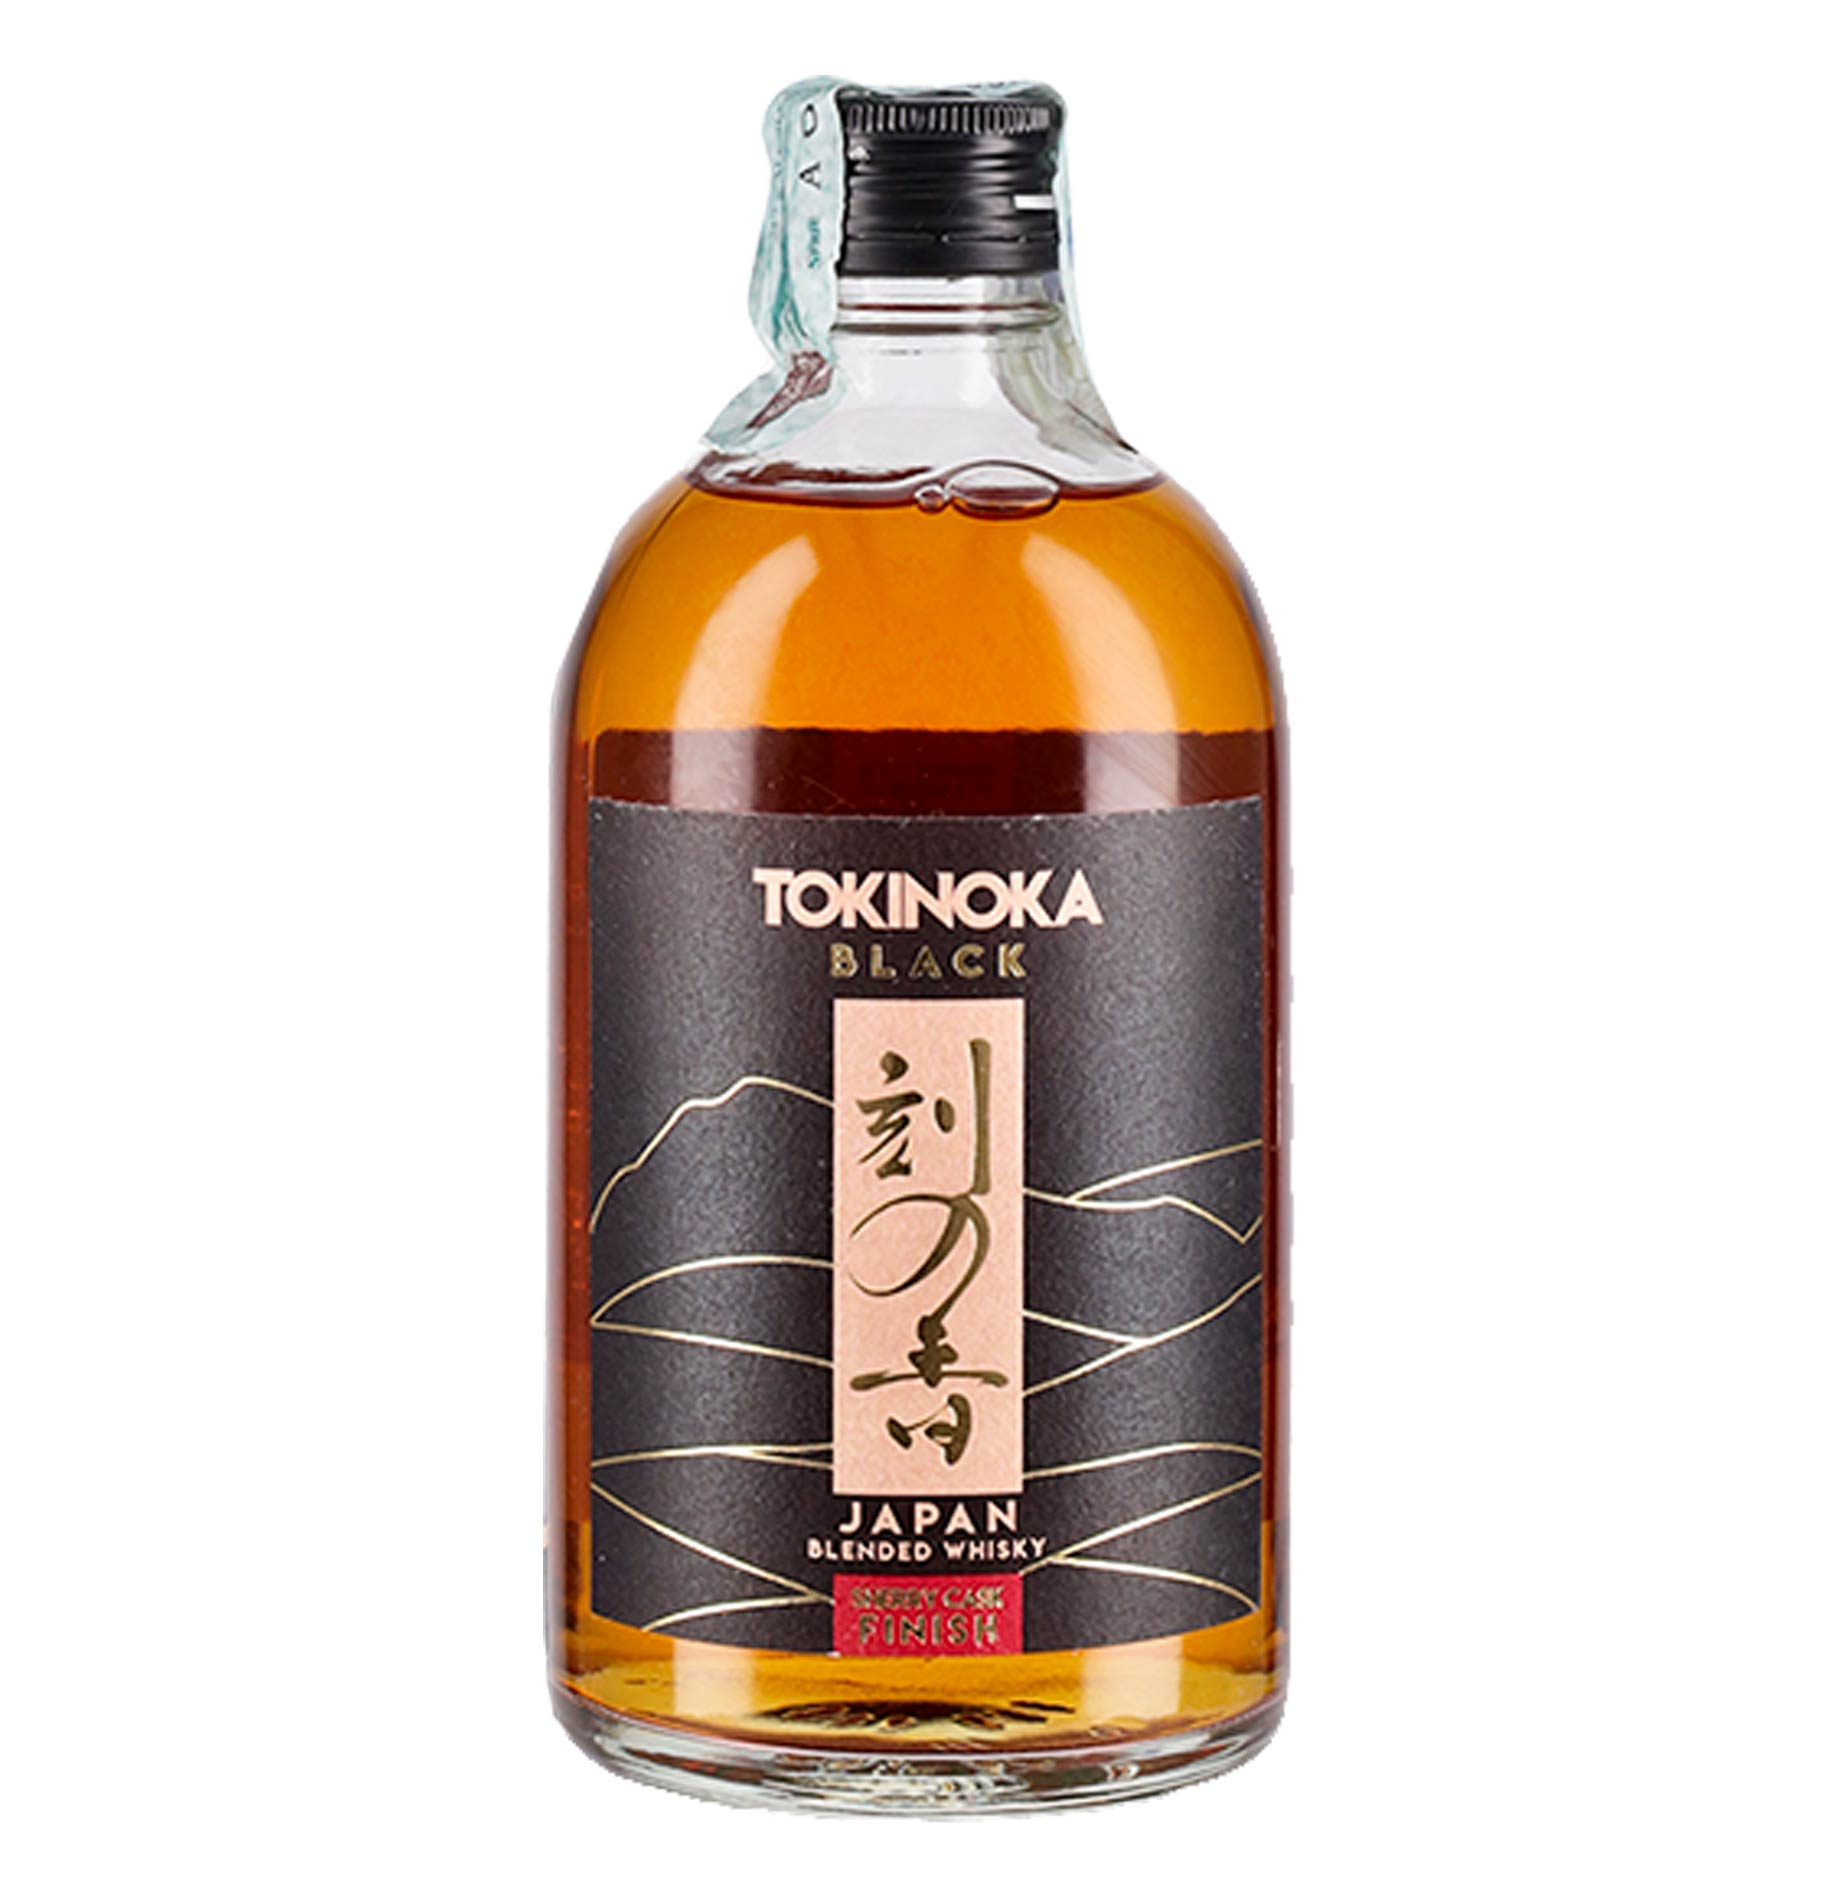 Japan Blended Whisky Tokinoka Black Tc Sherry Cask Finish